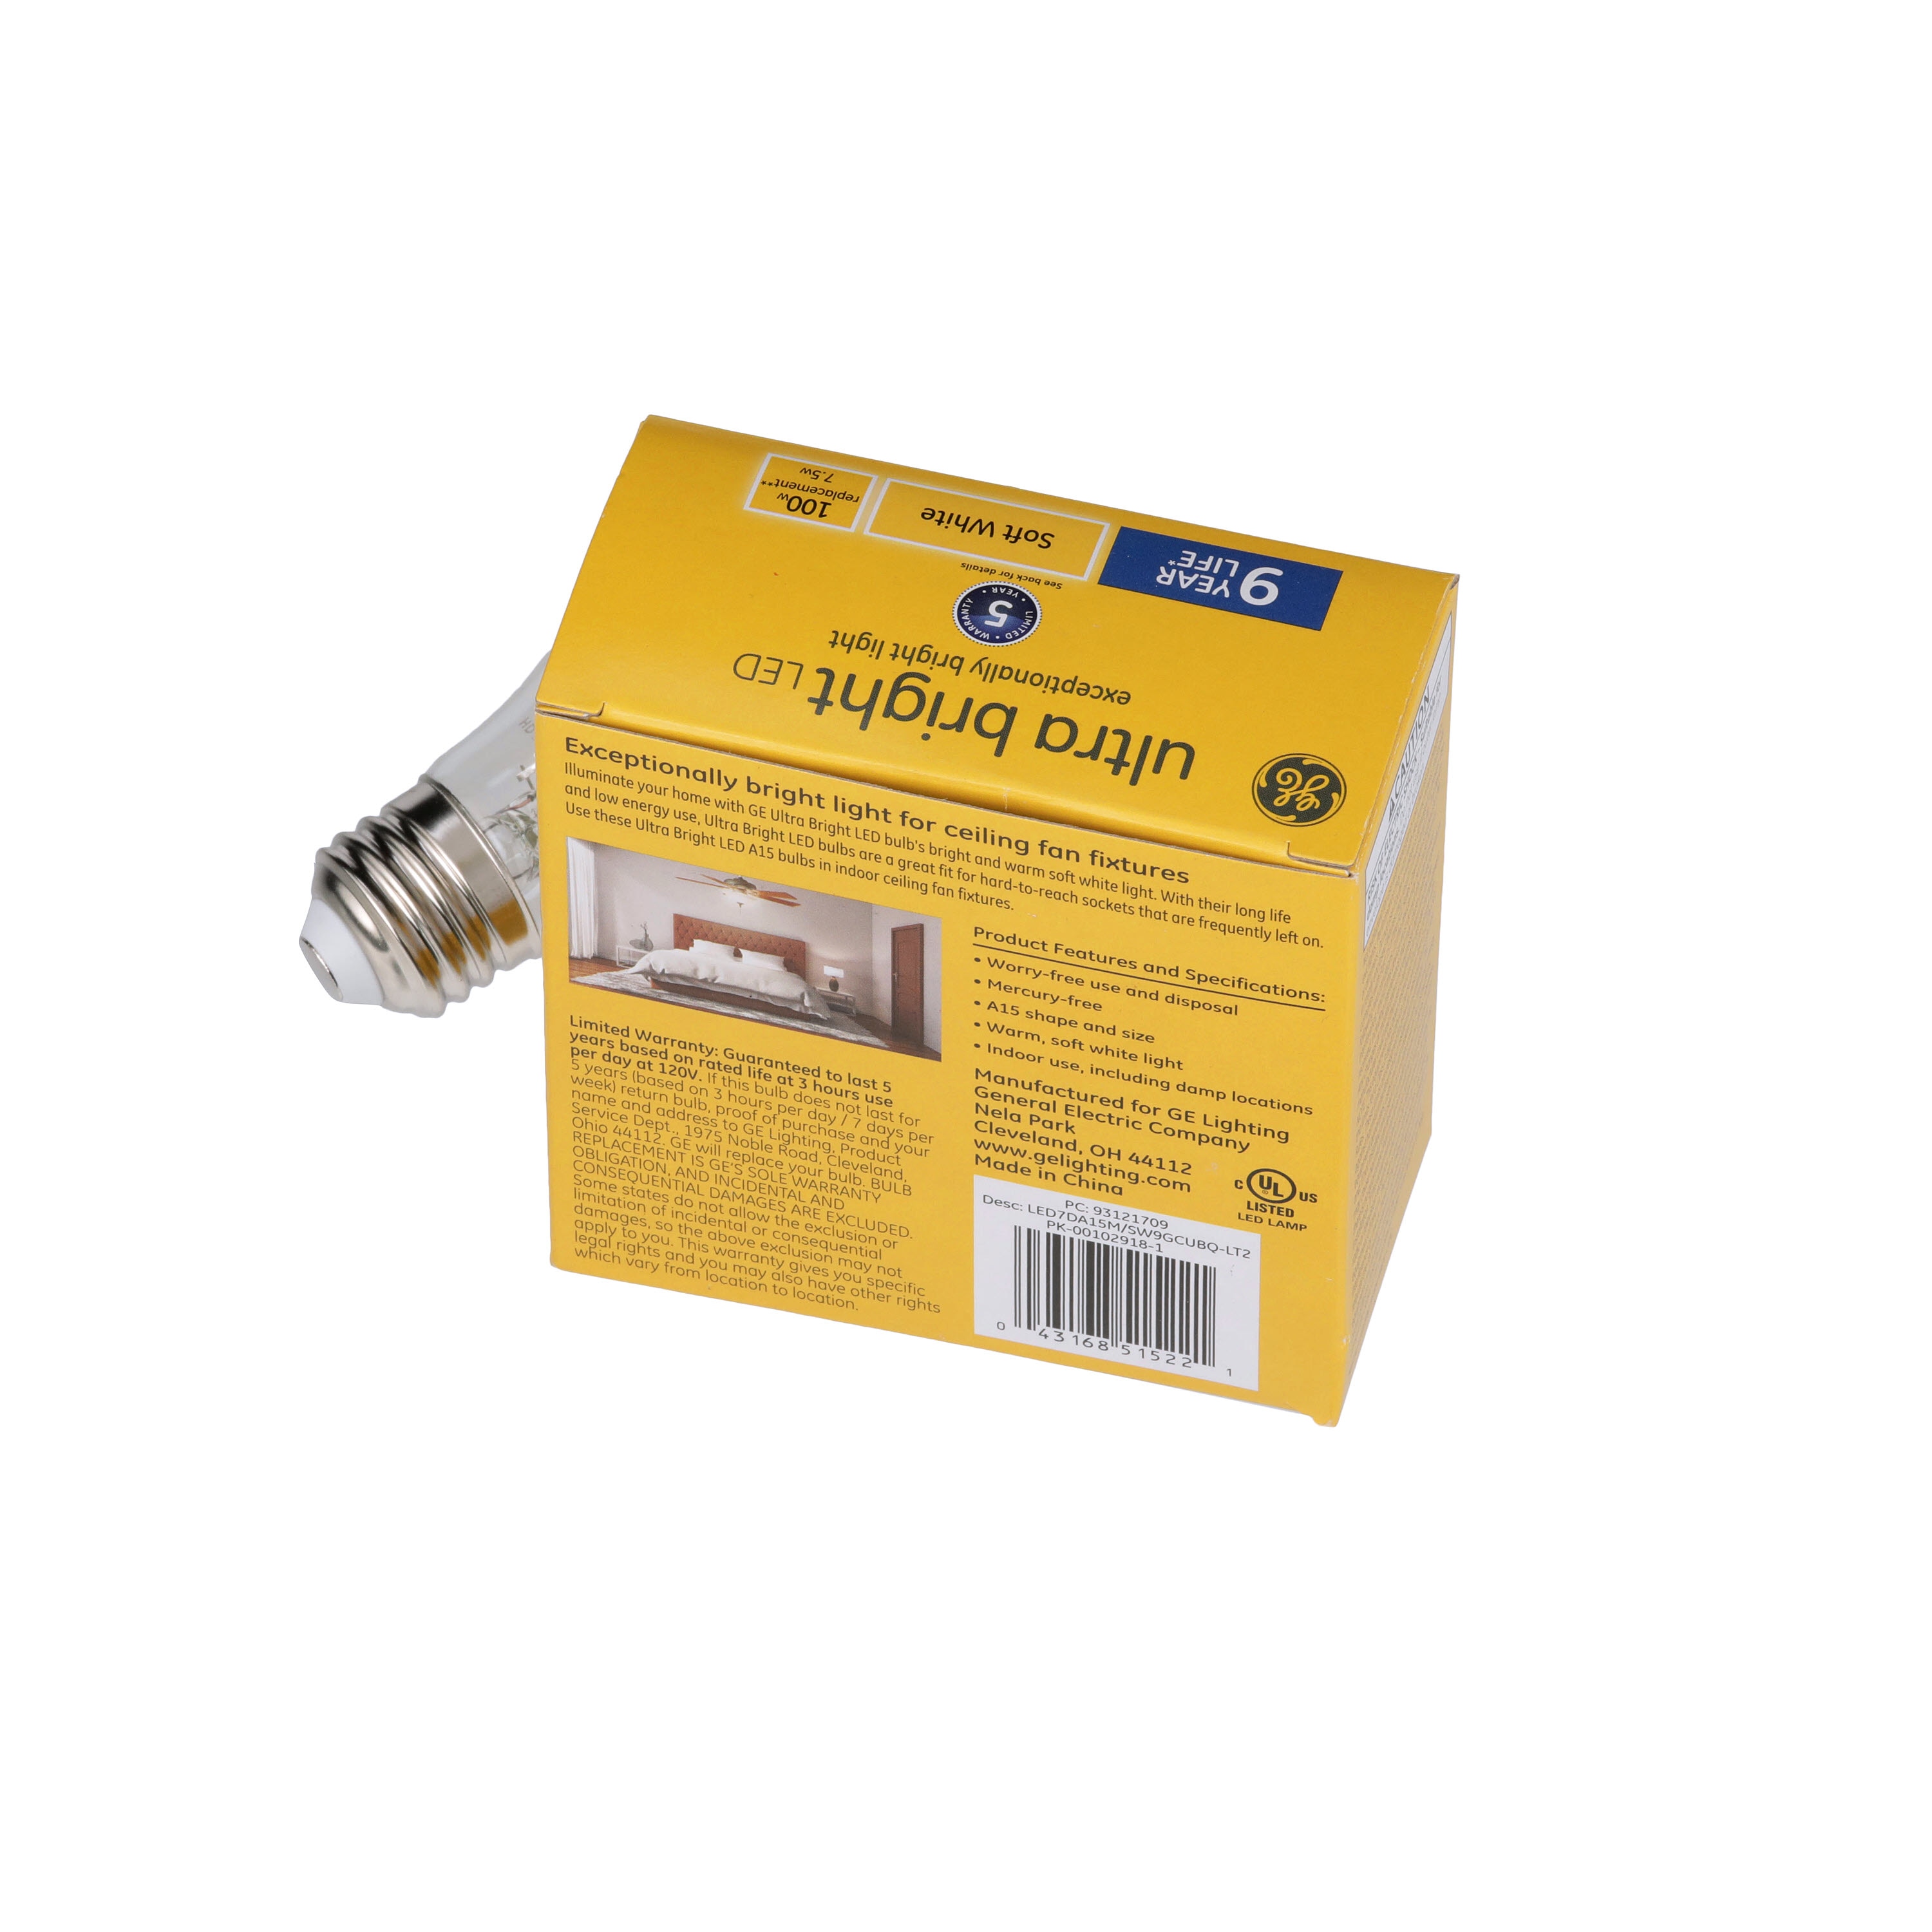 GE Ultra Bright 100-Watt EQ A15 Soft White Dimmable LED Light Bulb 